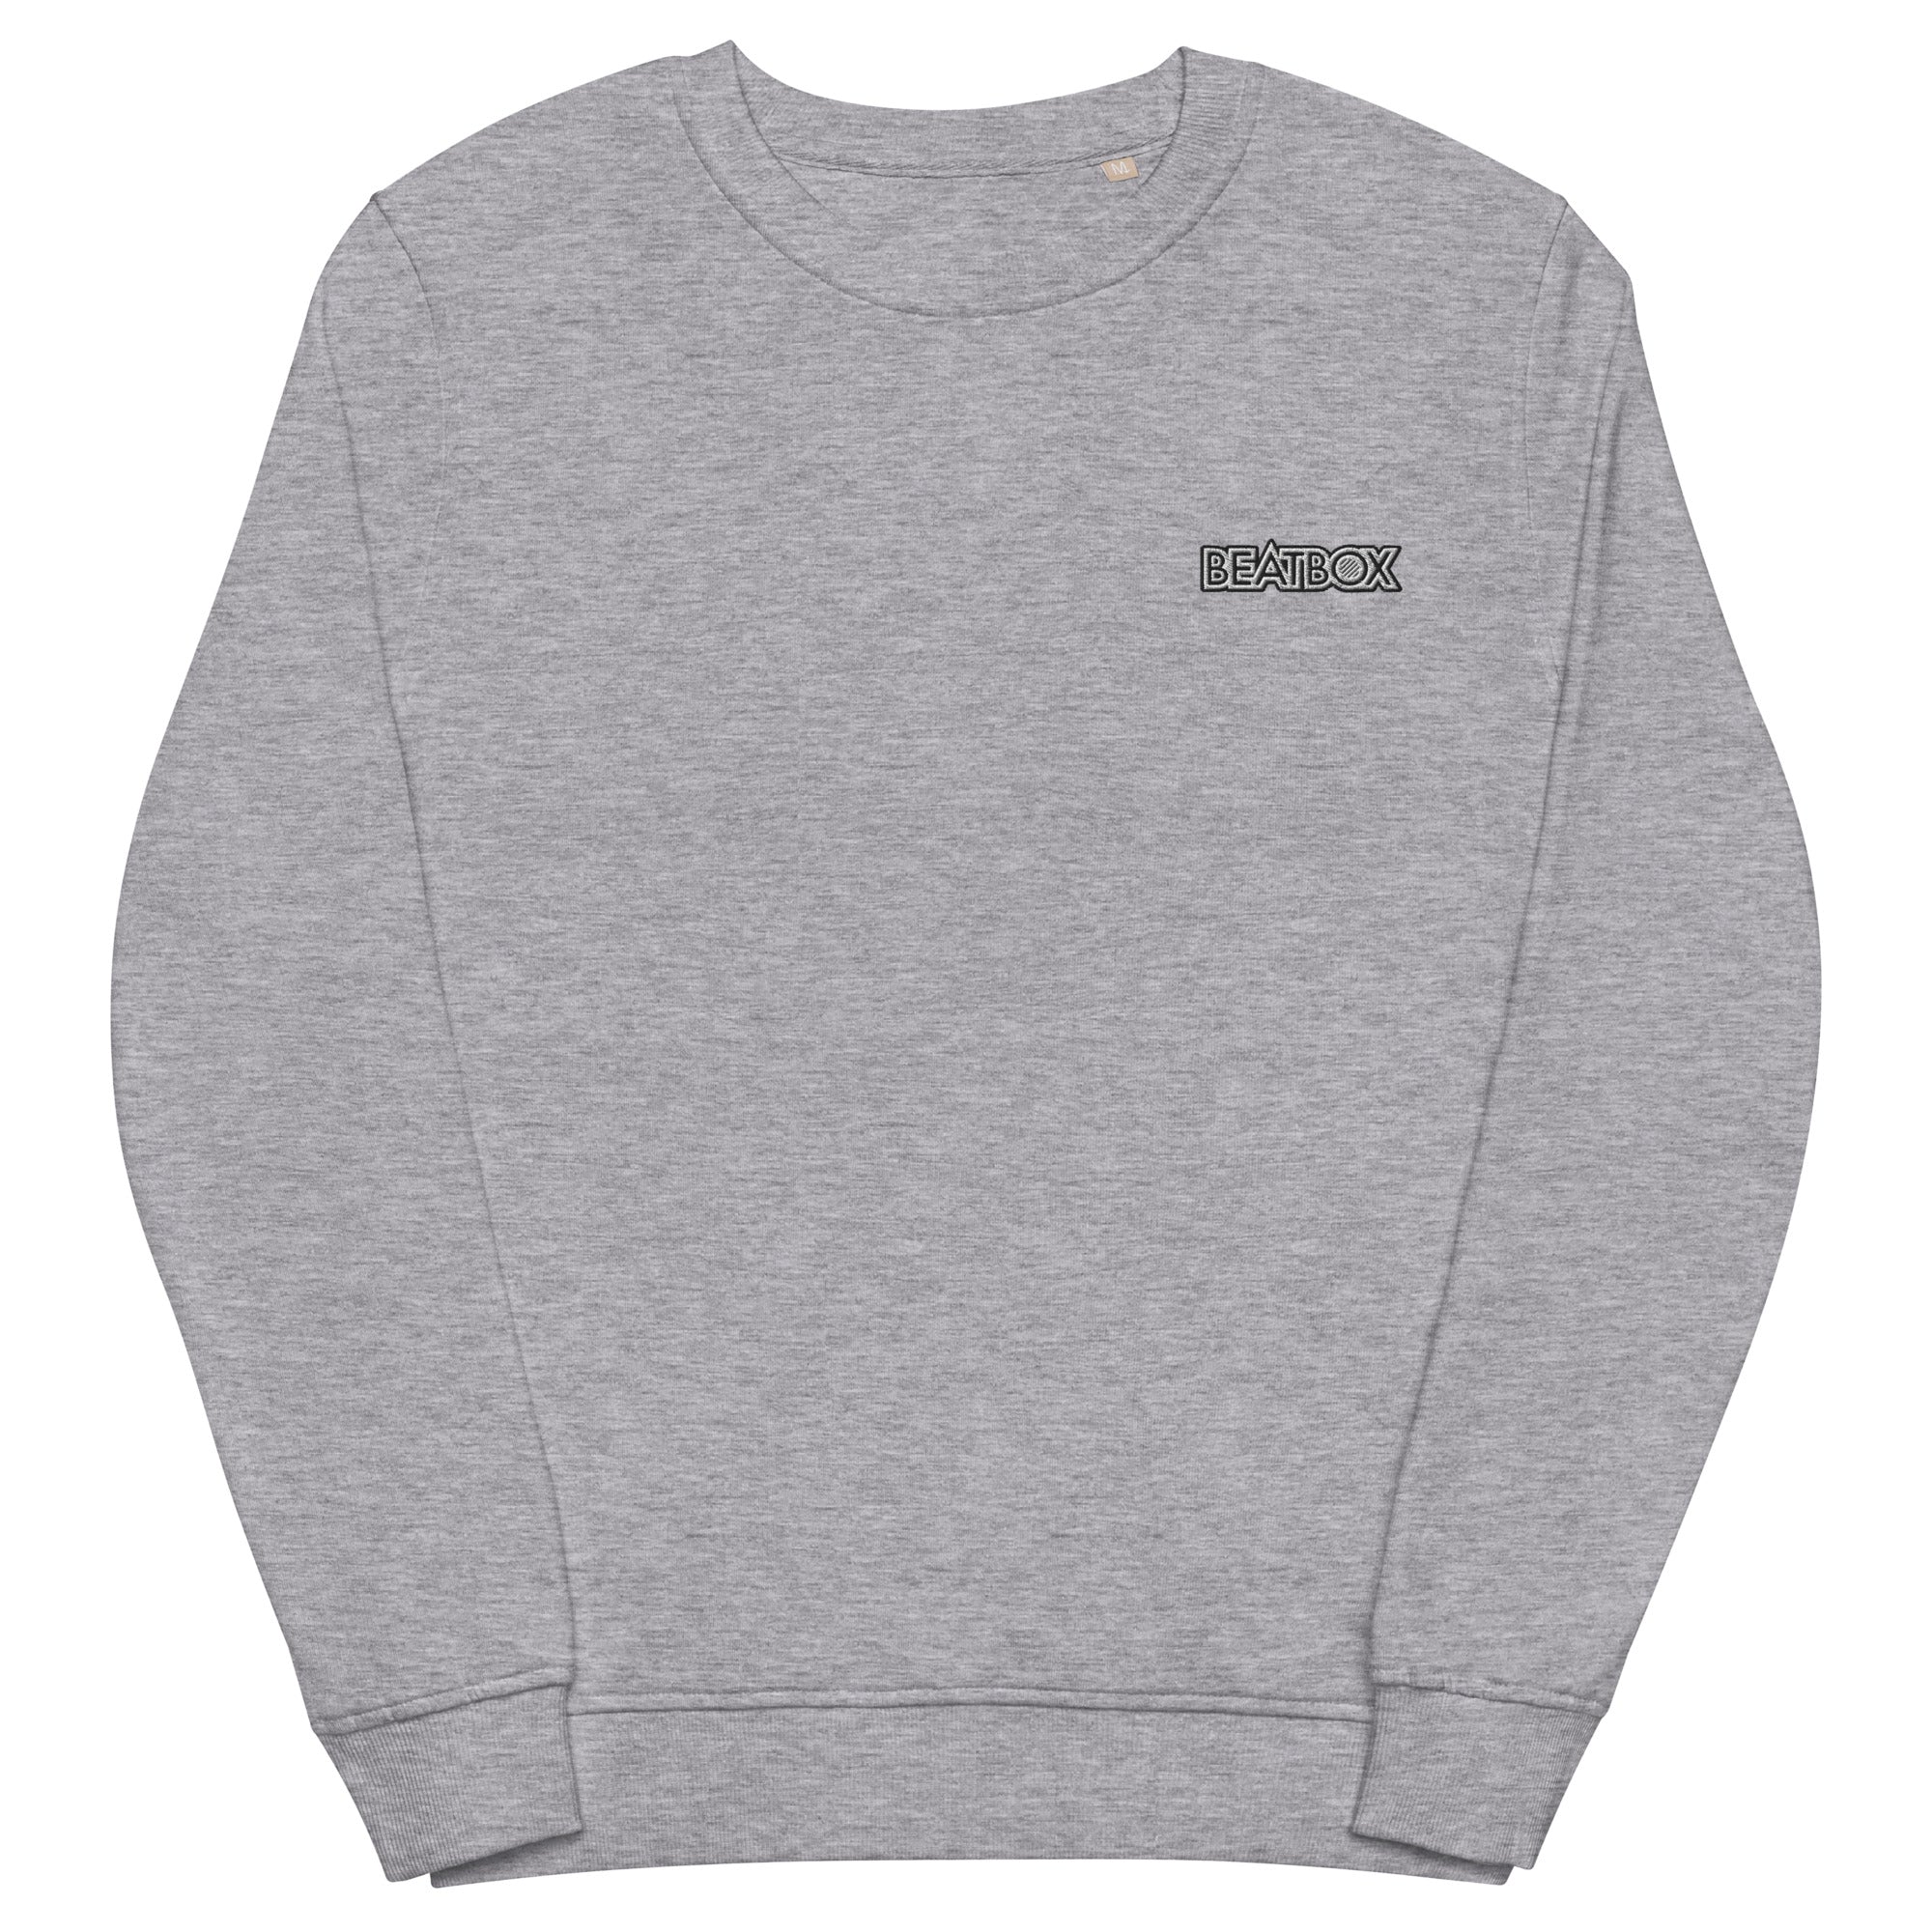 BeatBox embroidered organic sweatshirt